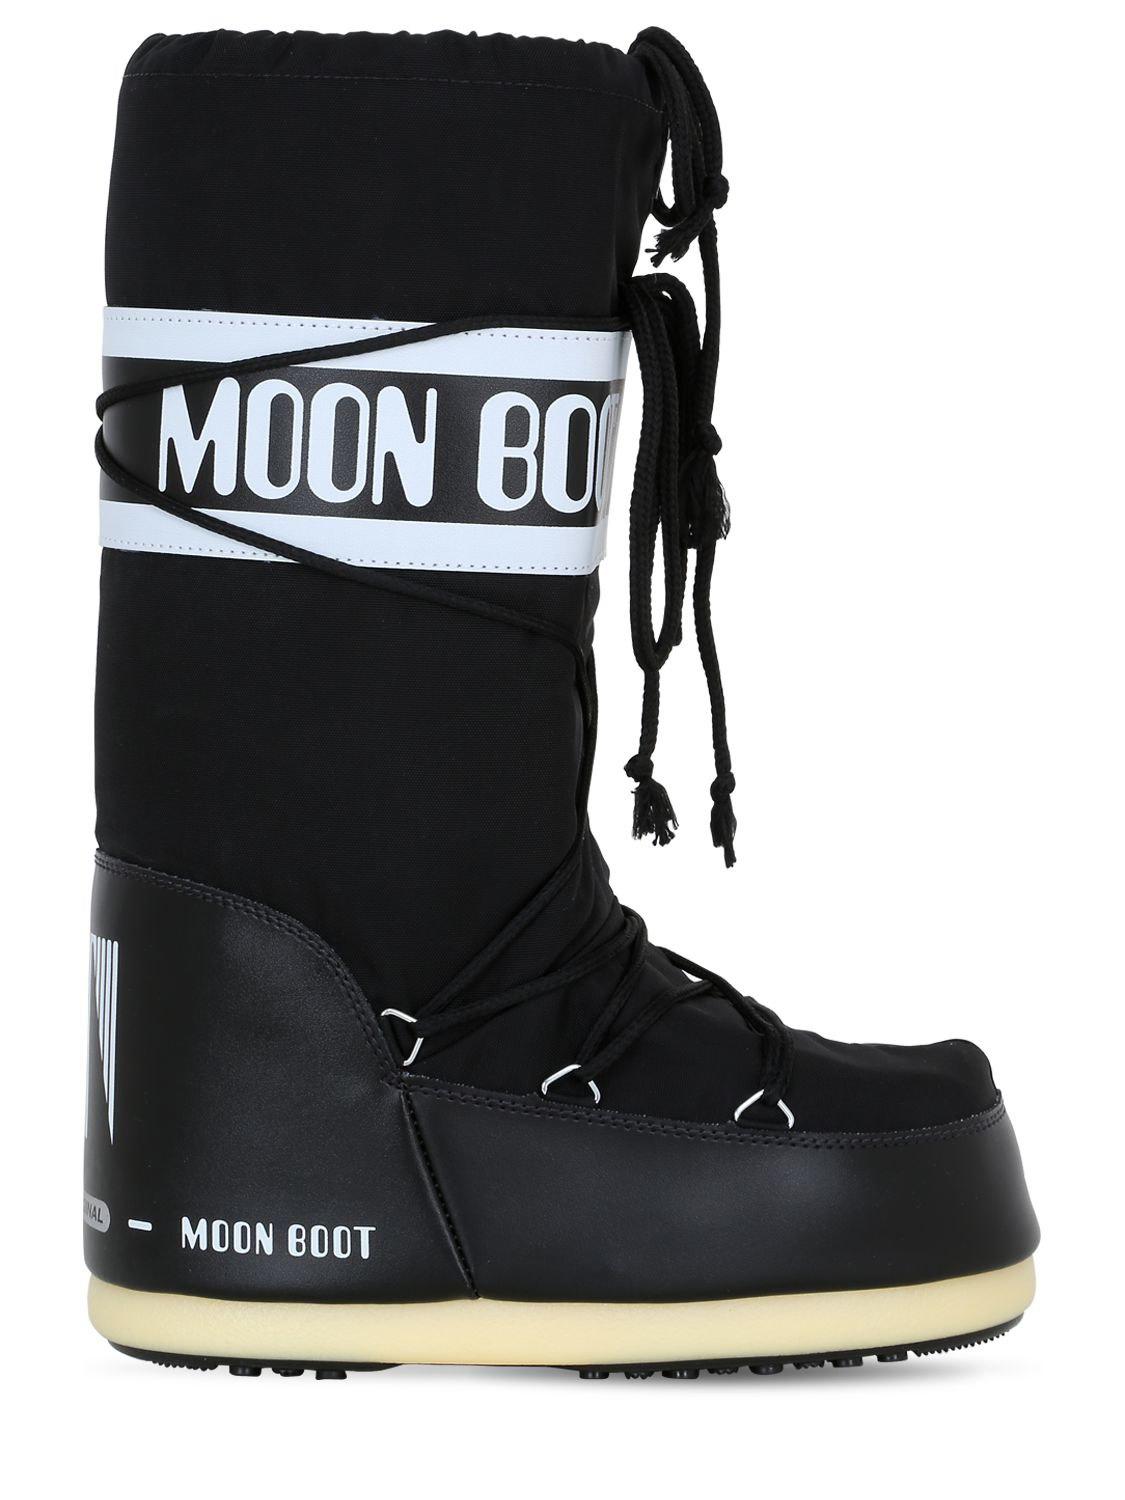 Обувь муна. Сапоги Moon Boot. Сапоги Moon Boot женские. Ботинки Moon Boot мужские. Валенки Moon Boot.